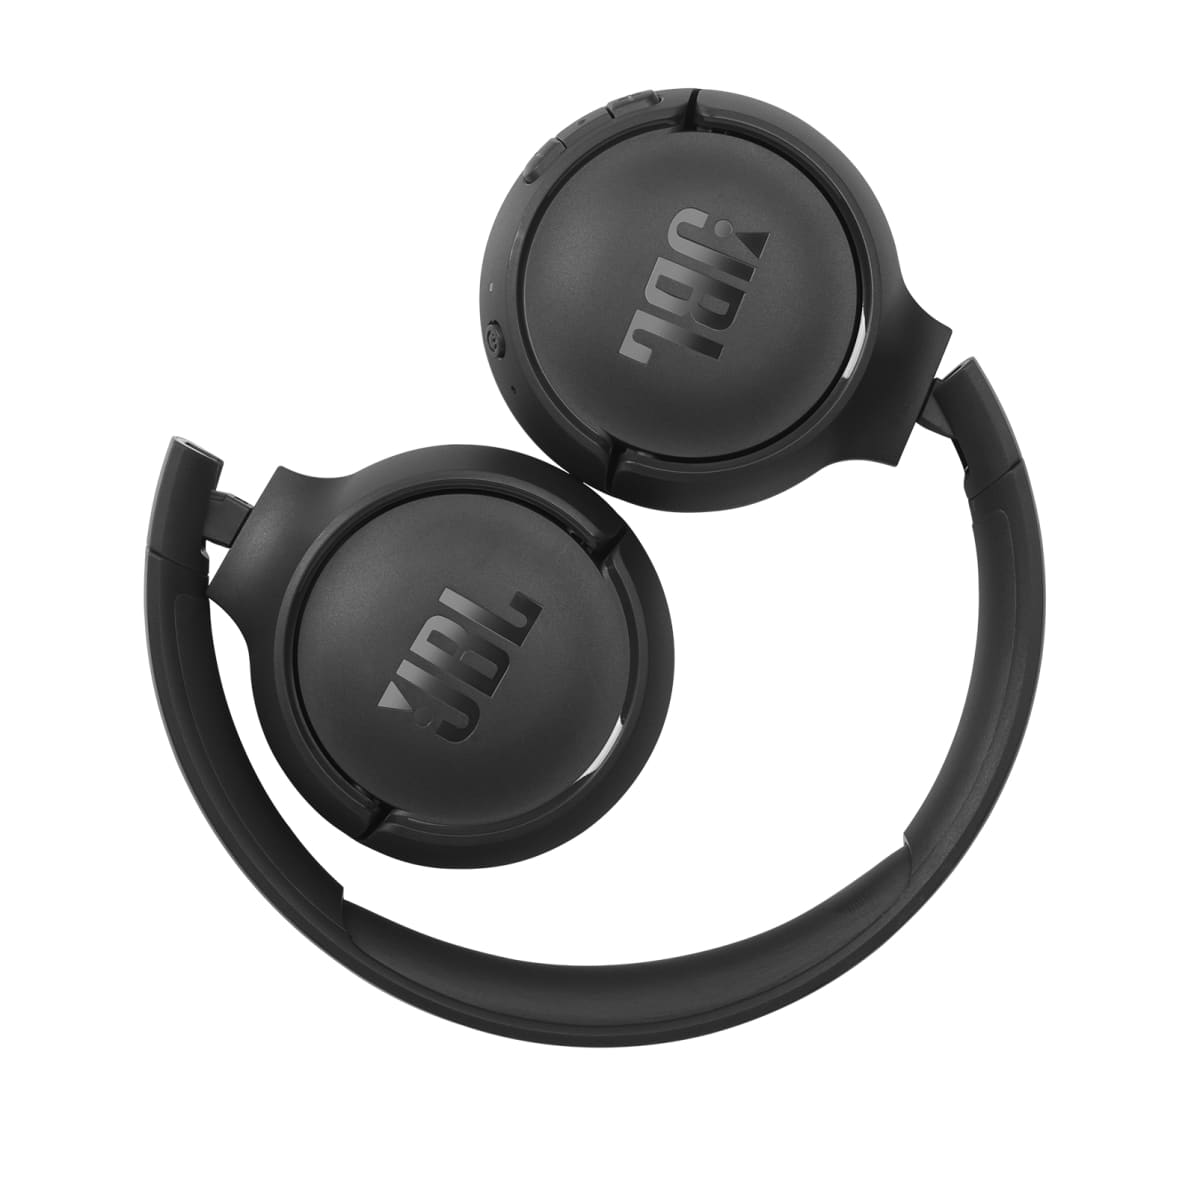 JBL TUNE 510BT Wireless on-ear headphones - Headphone